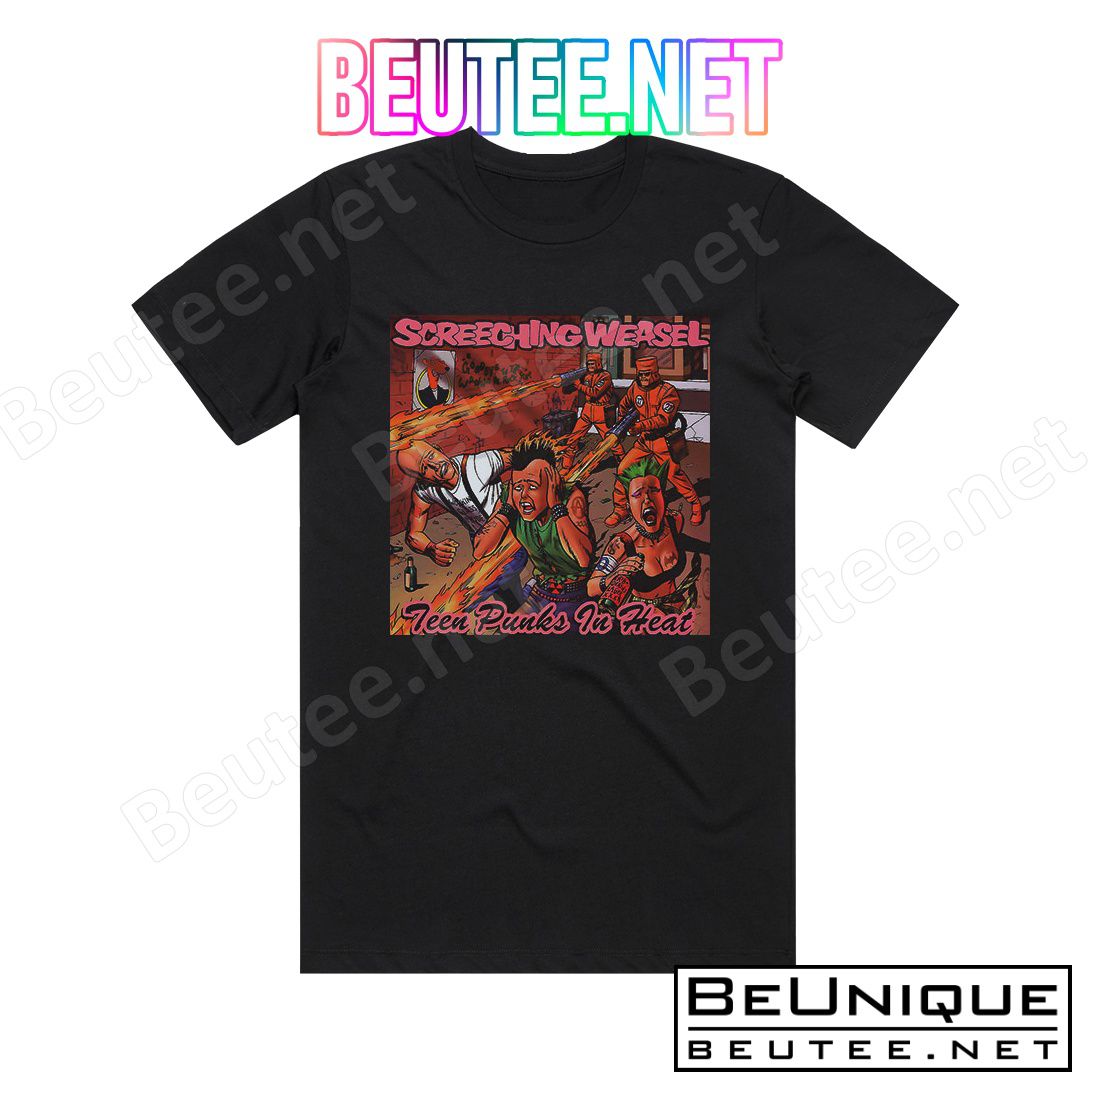 Screeching Weasel Teen Punks In Heat Album Cover T-Shirt